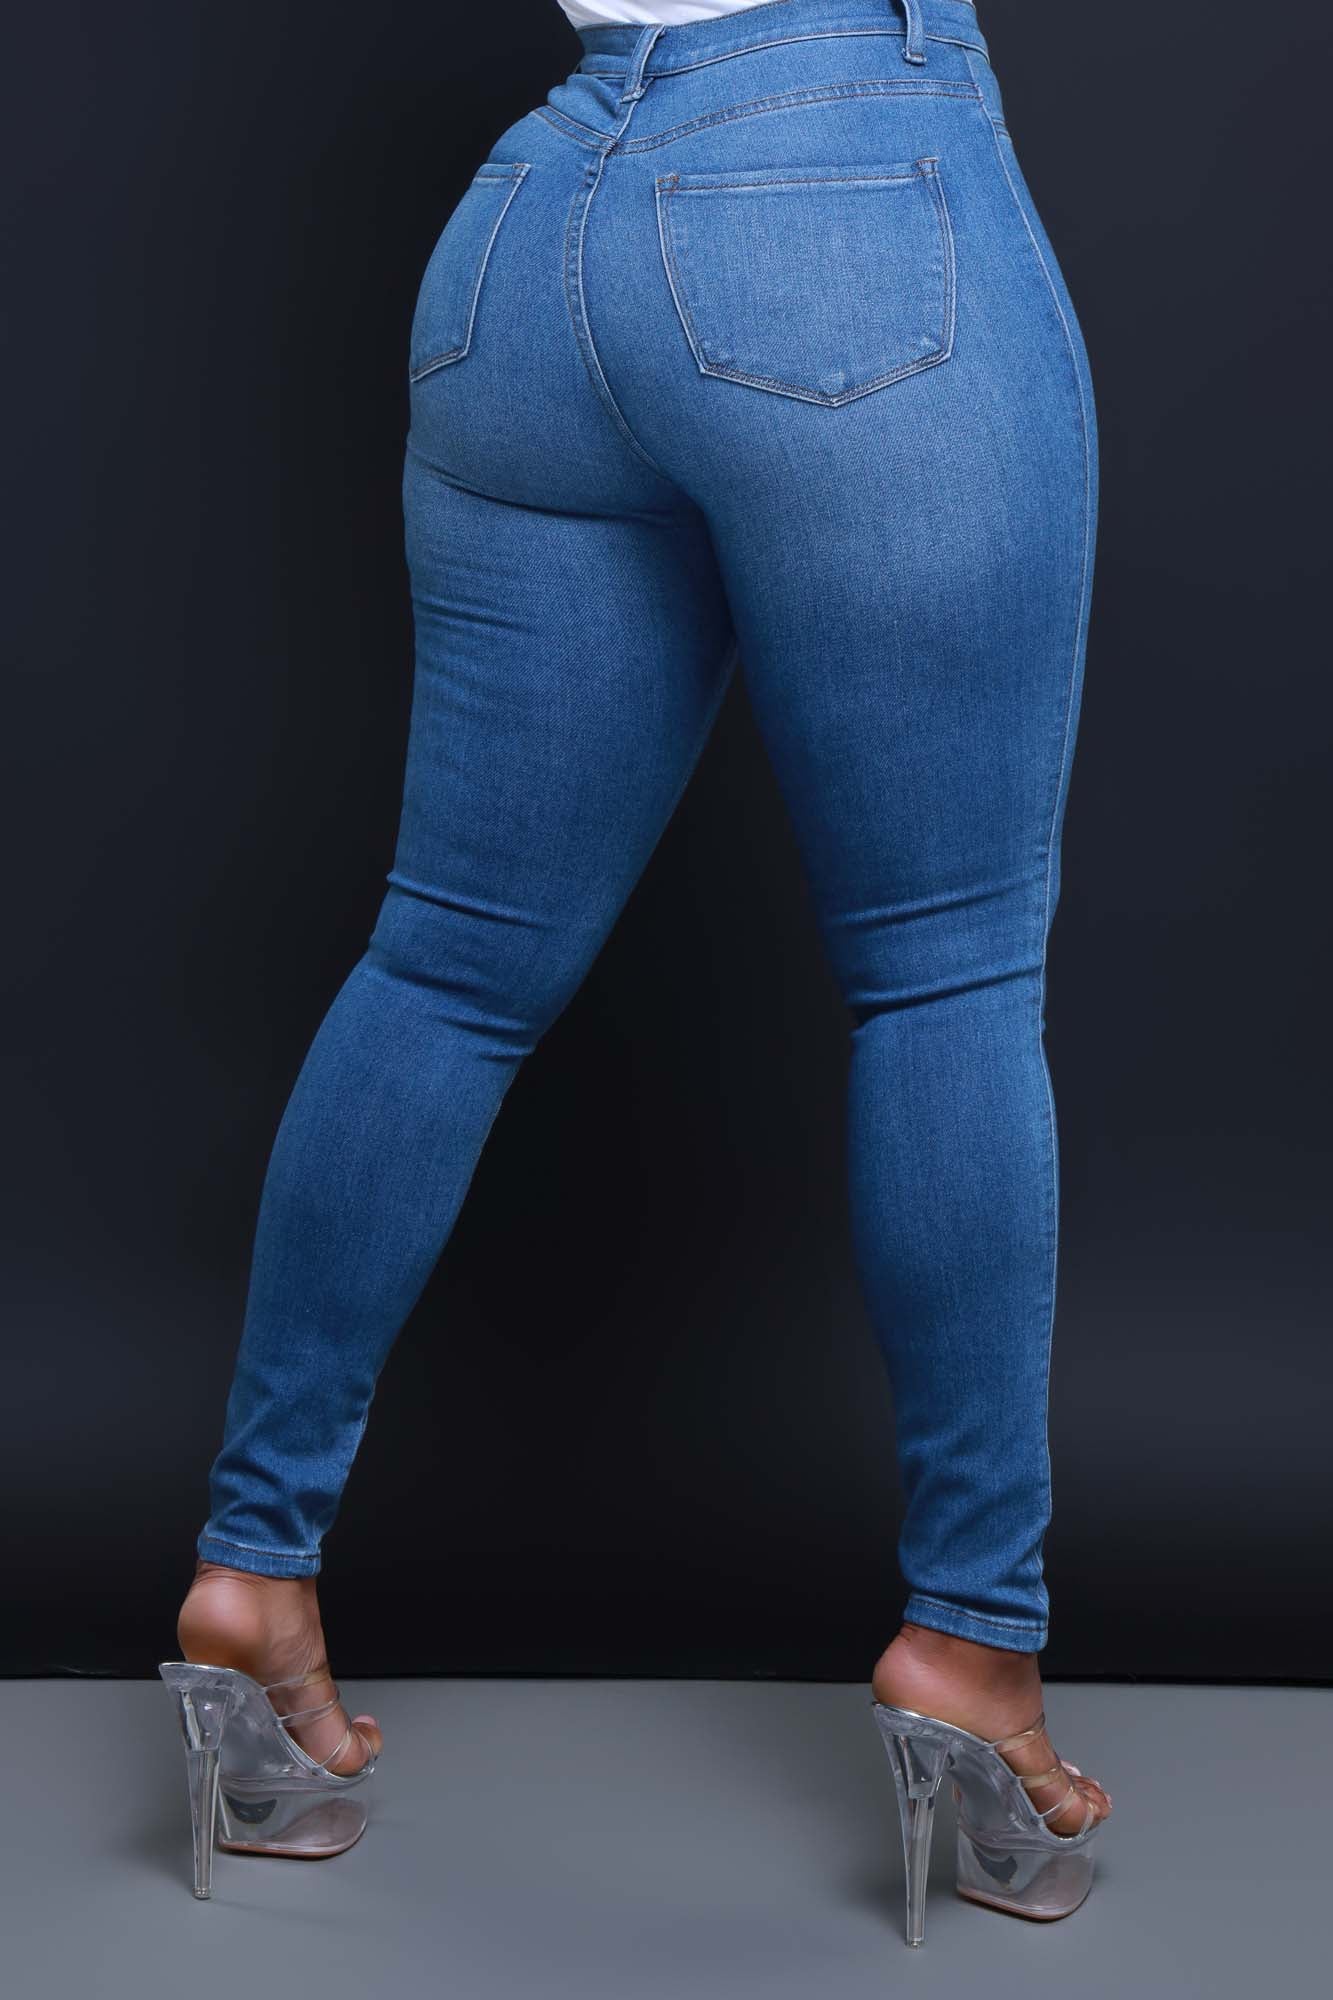 Plus Size Jeans (Dark Blue) 1x 2x 3x – Boughie Curves